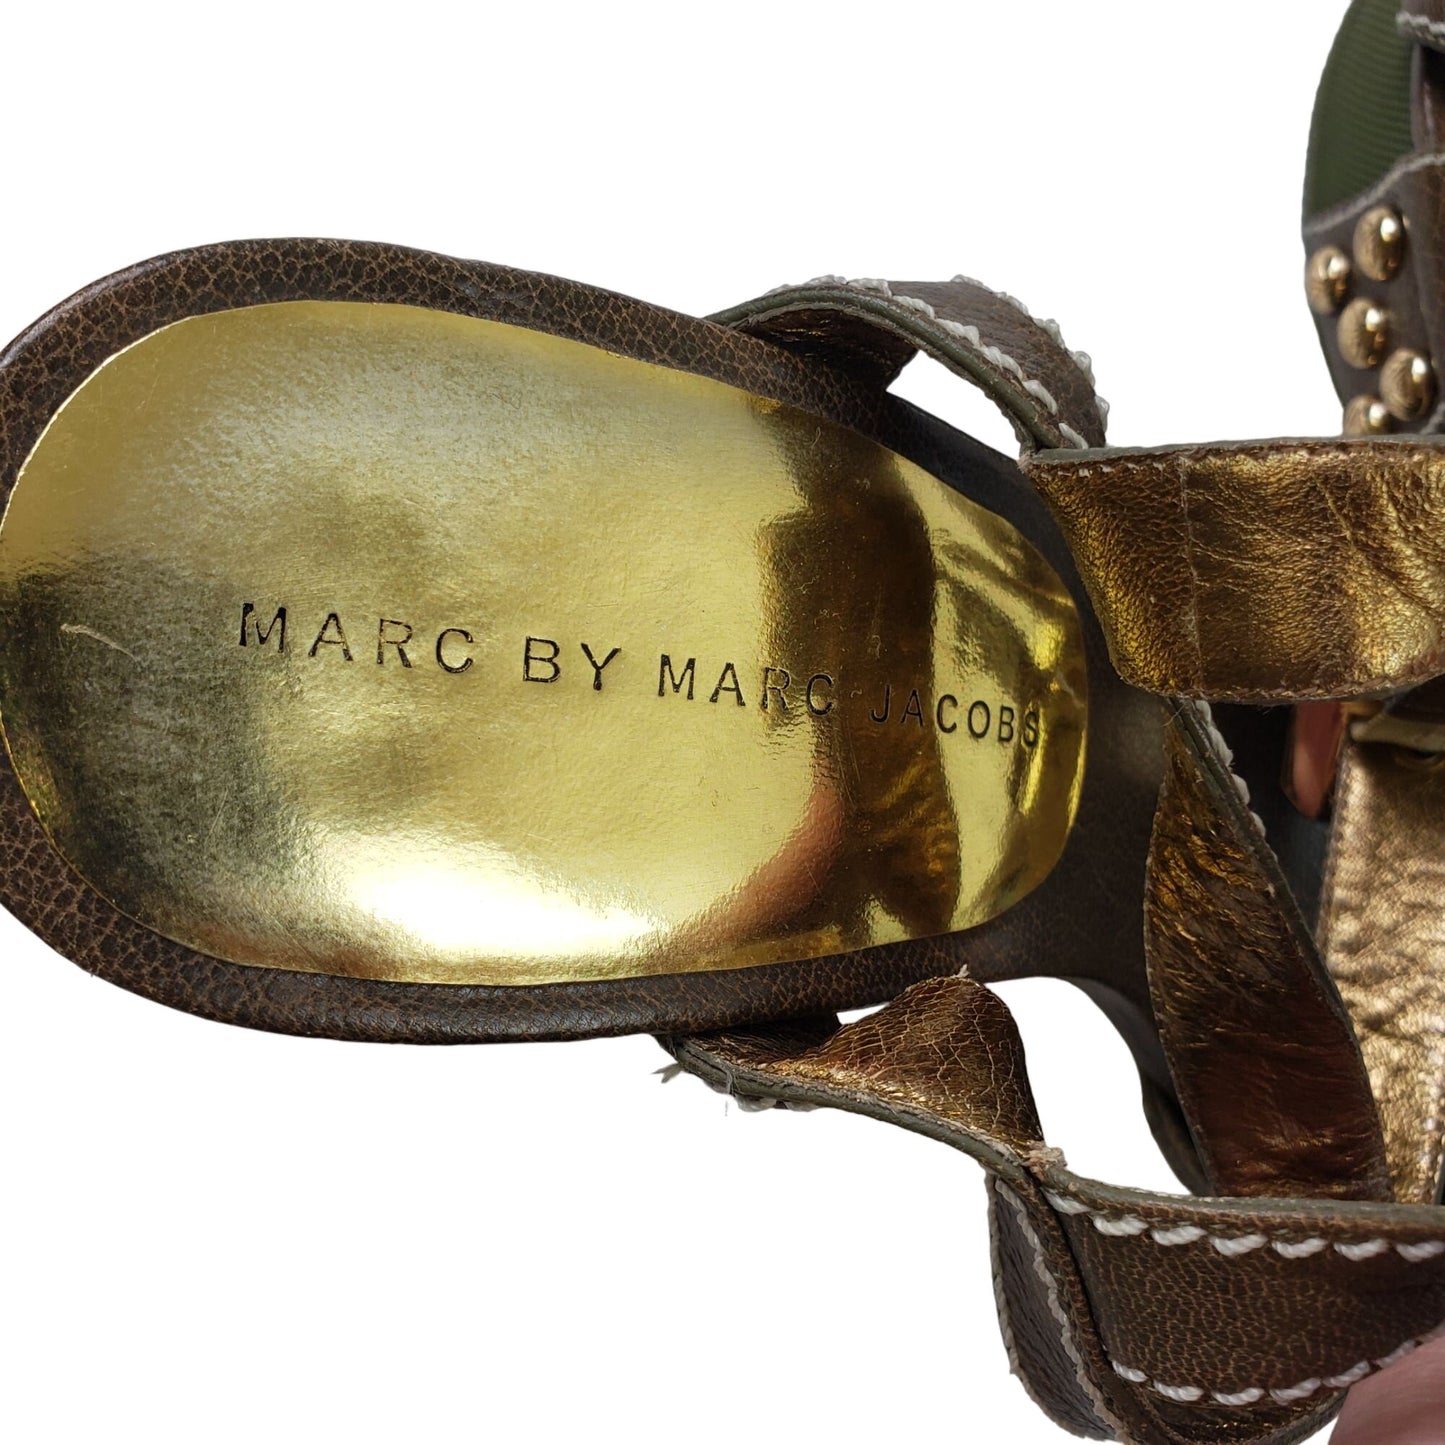 Marc by Marc Jacobs Leather Platform Studded Chunky Heels Size EU 39.5/US 8